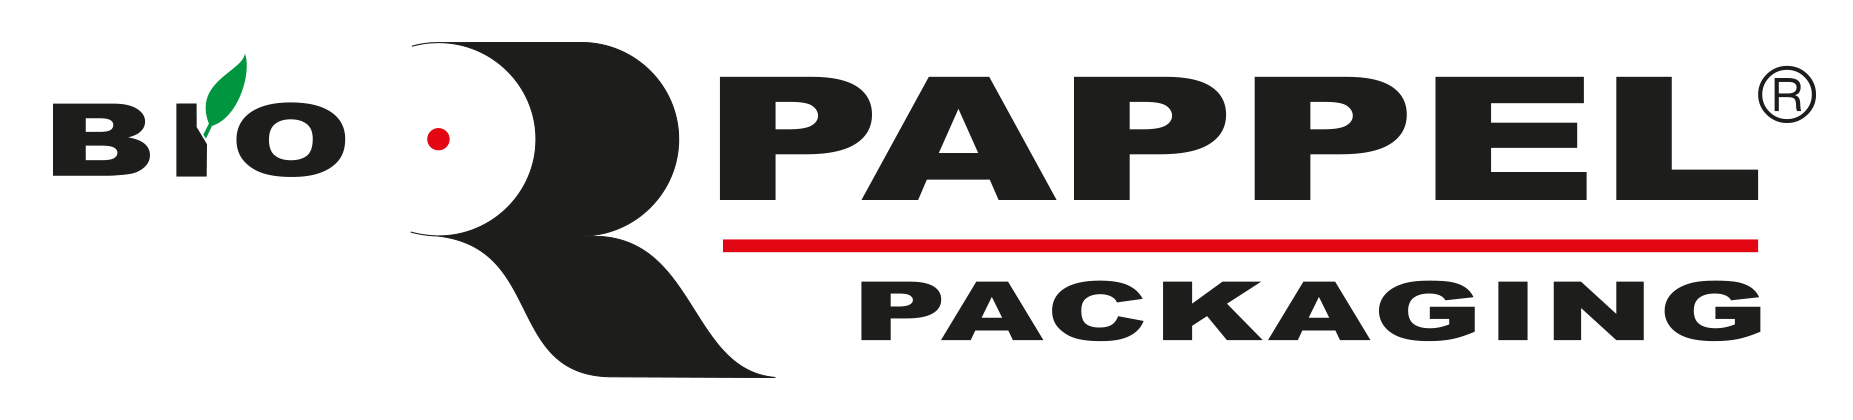 logo-bio-pappel-packaging-transp-1